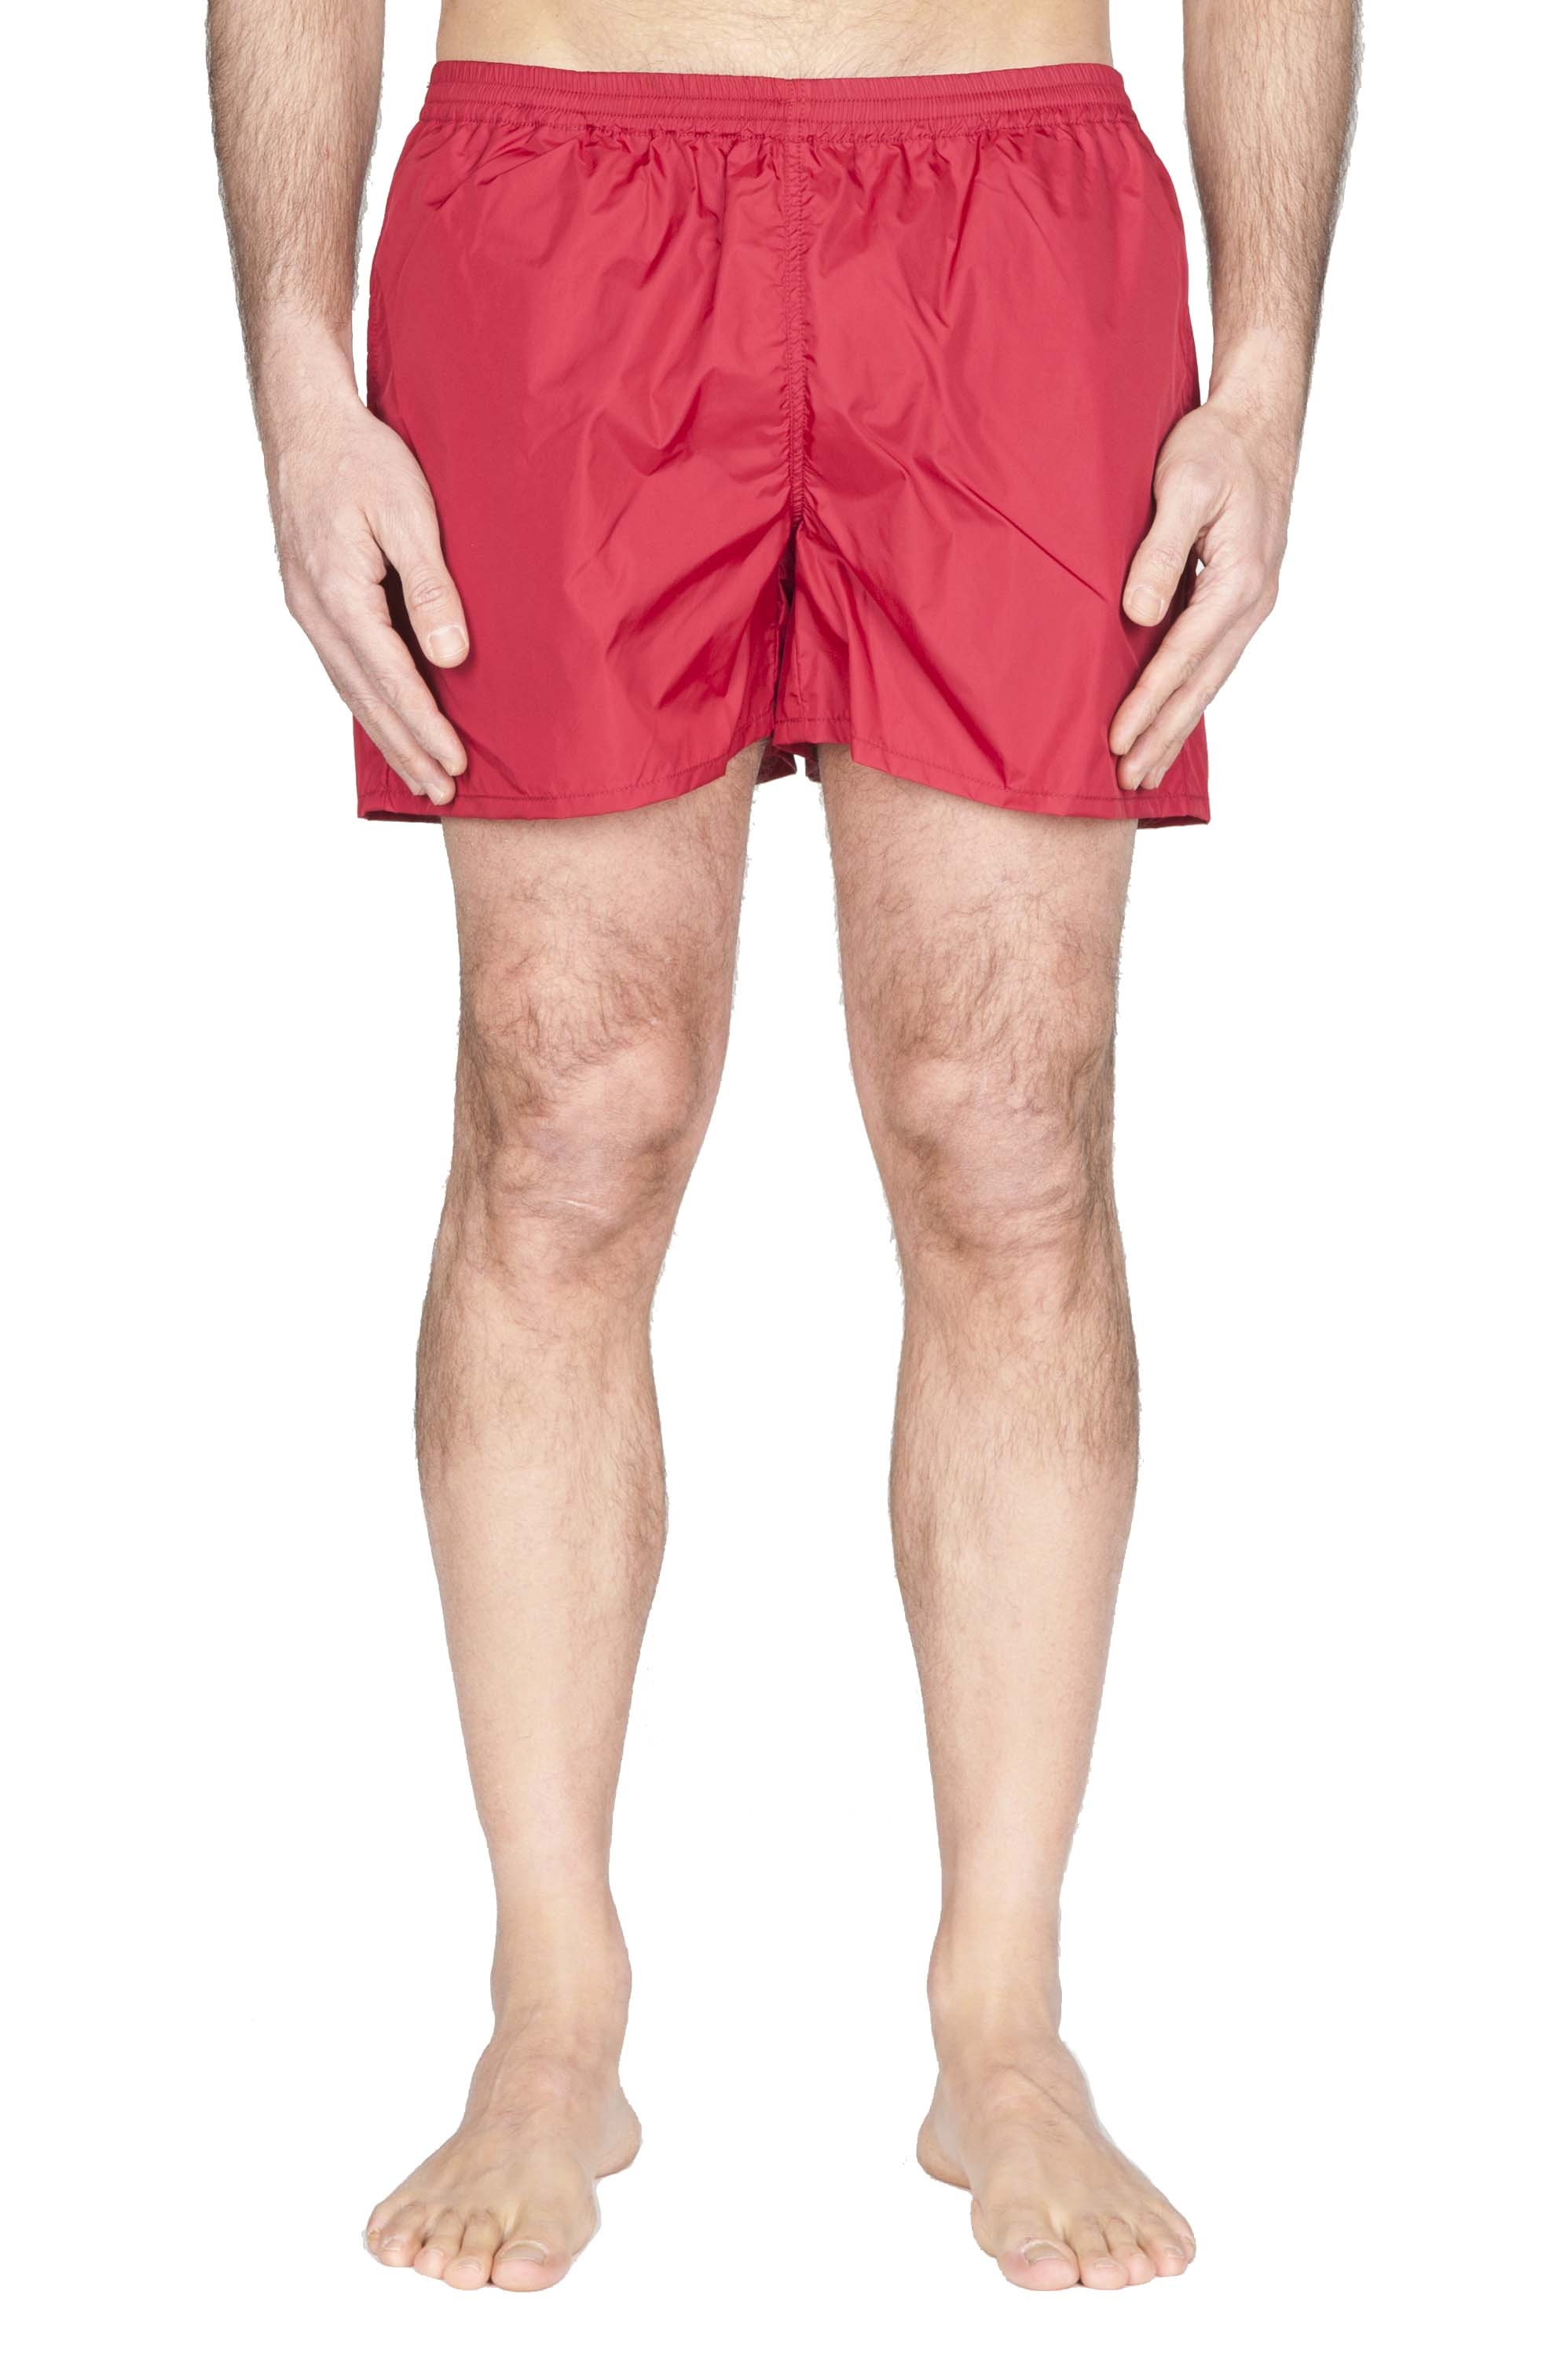 SBU 01760 Tactical swimsuit trunks in red ultra-lightweight nylon 01